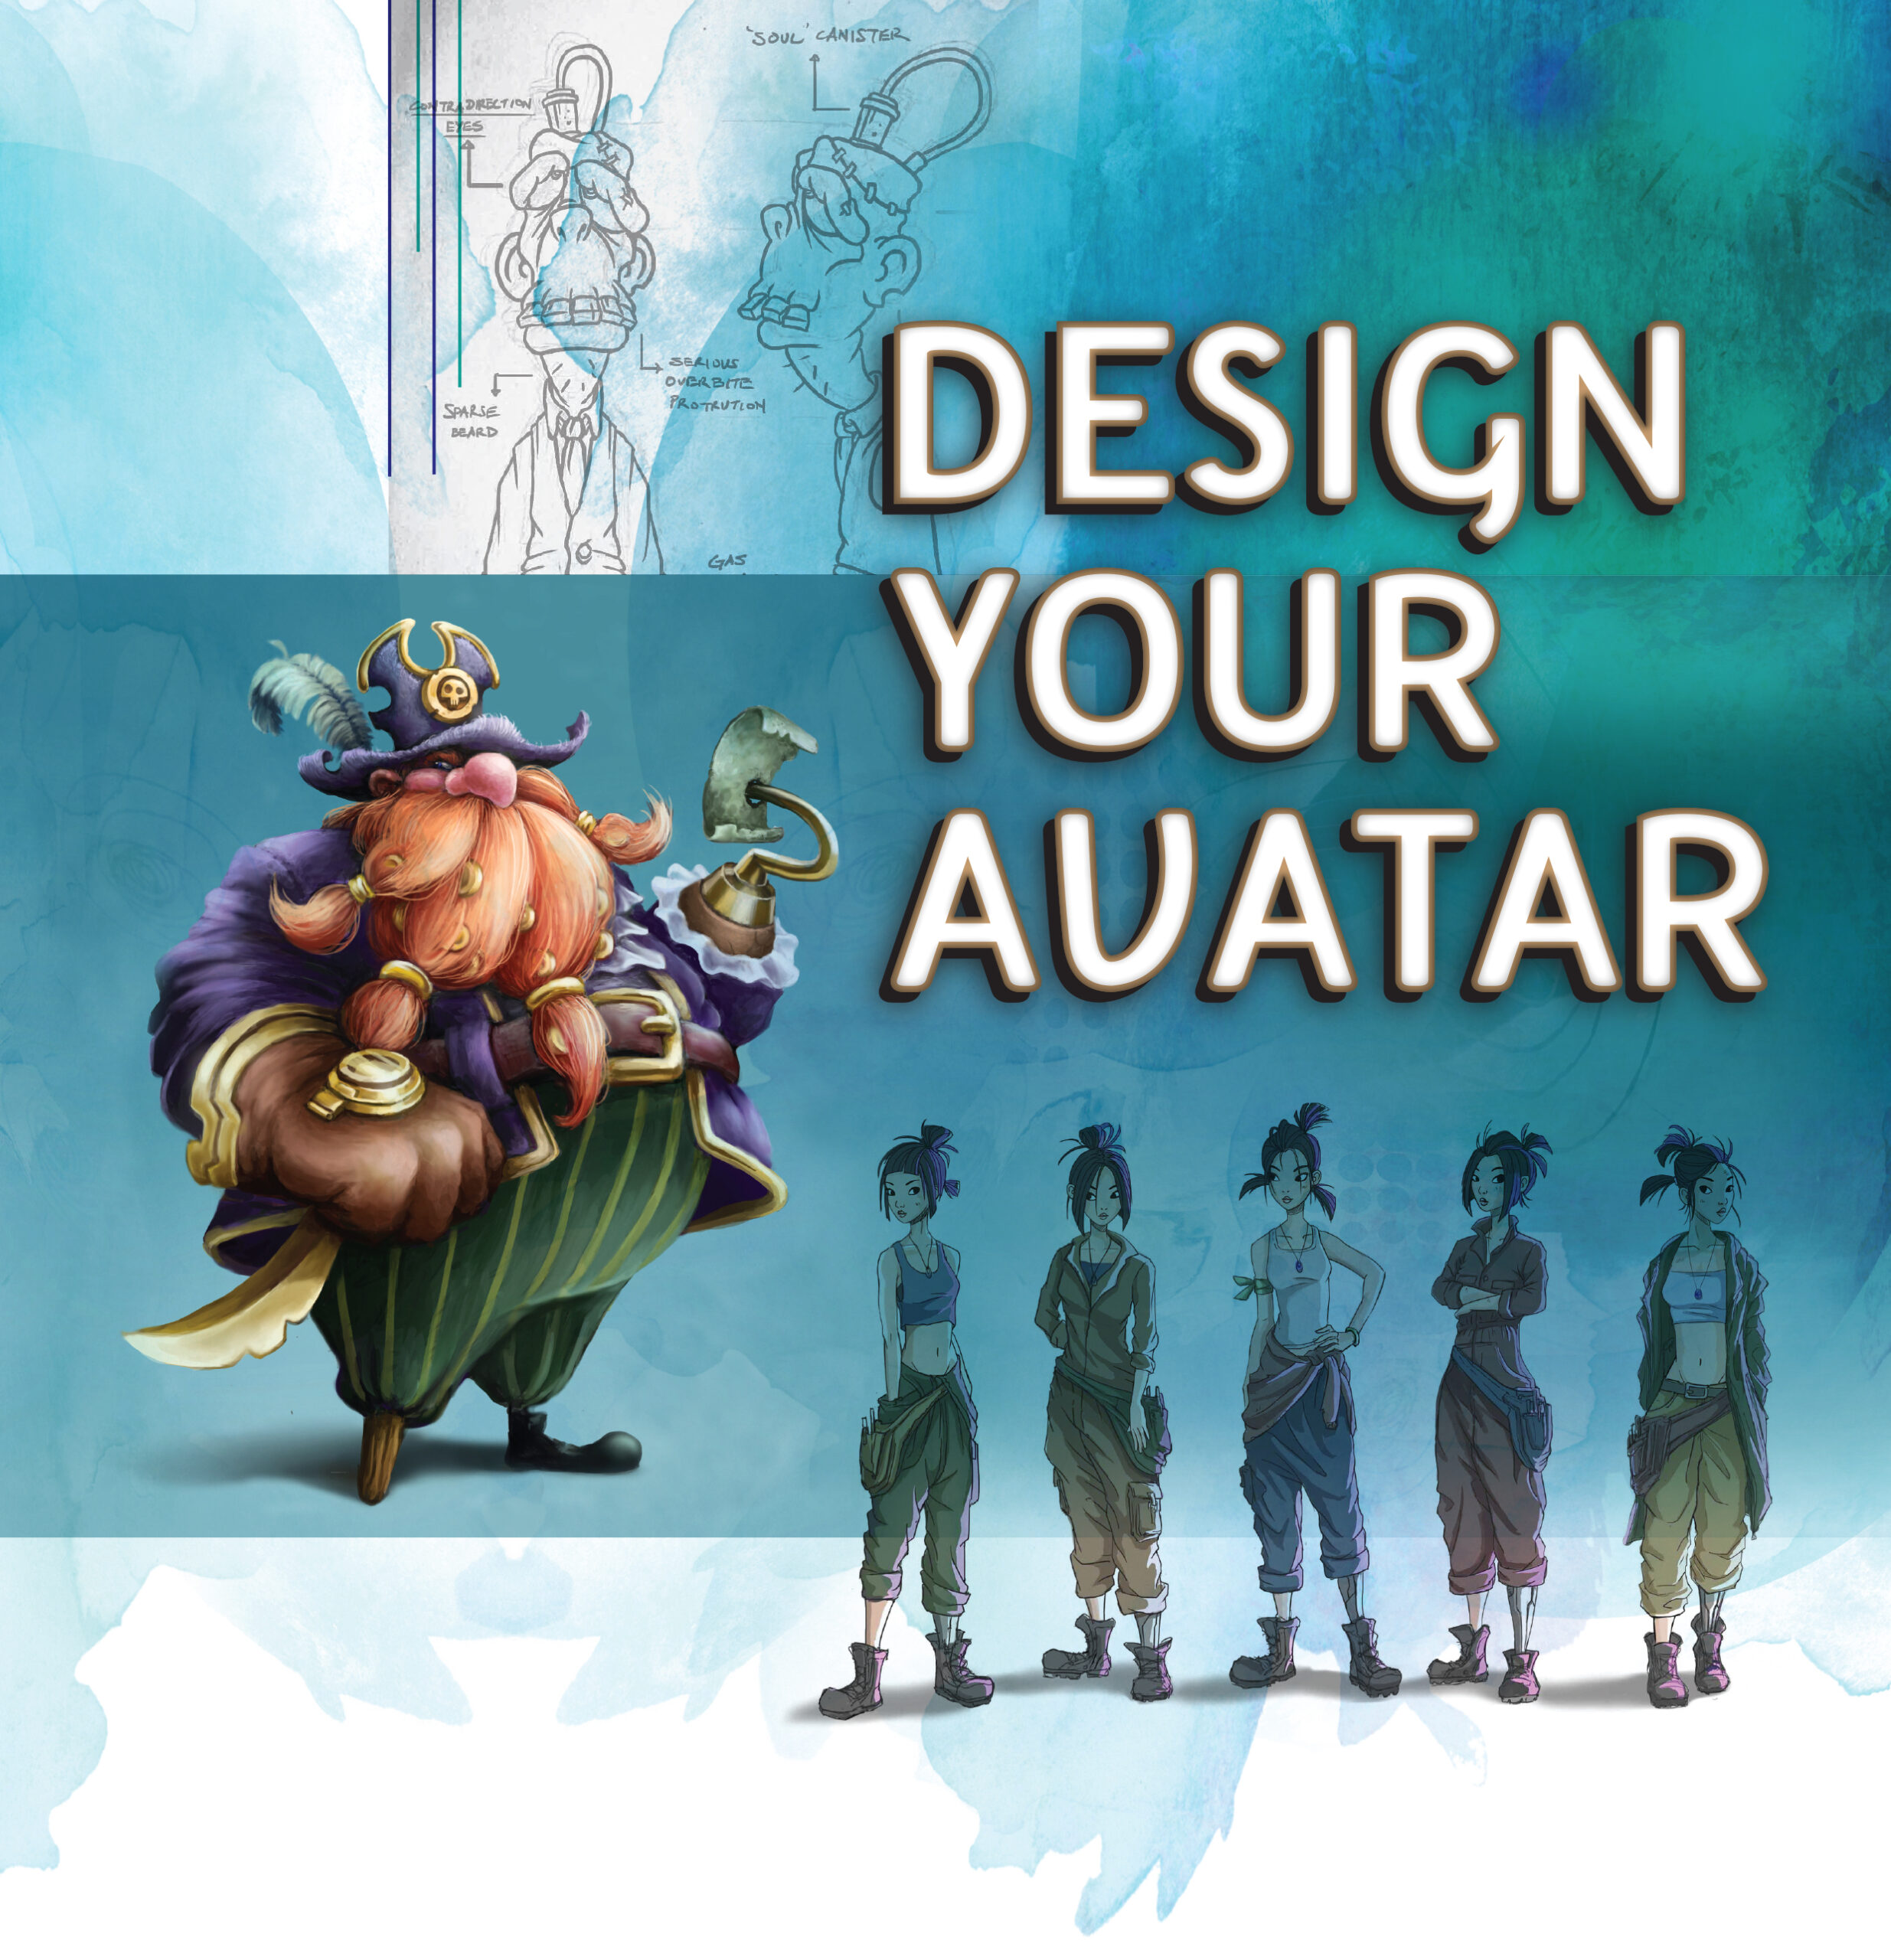 Avatar The Last Airbender Fan Art Contest